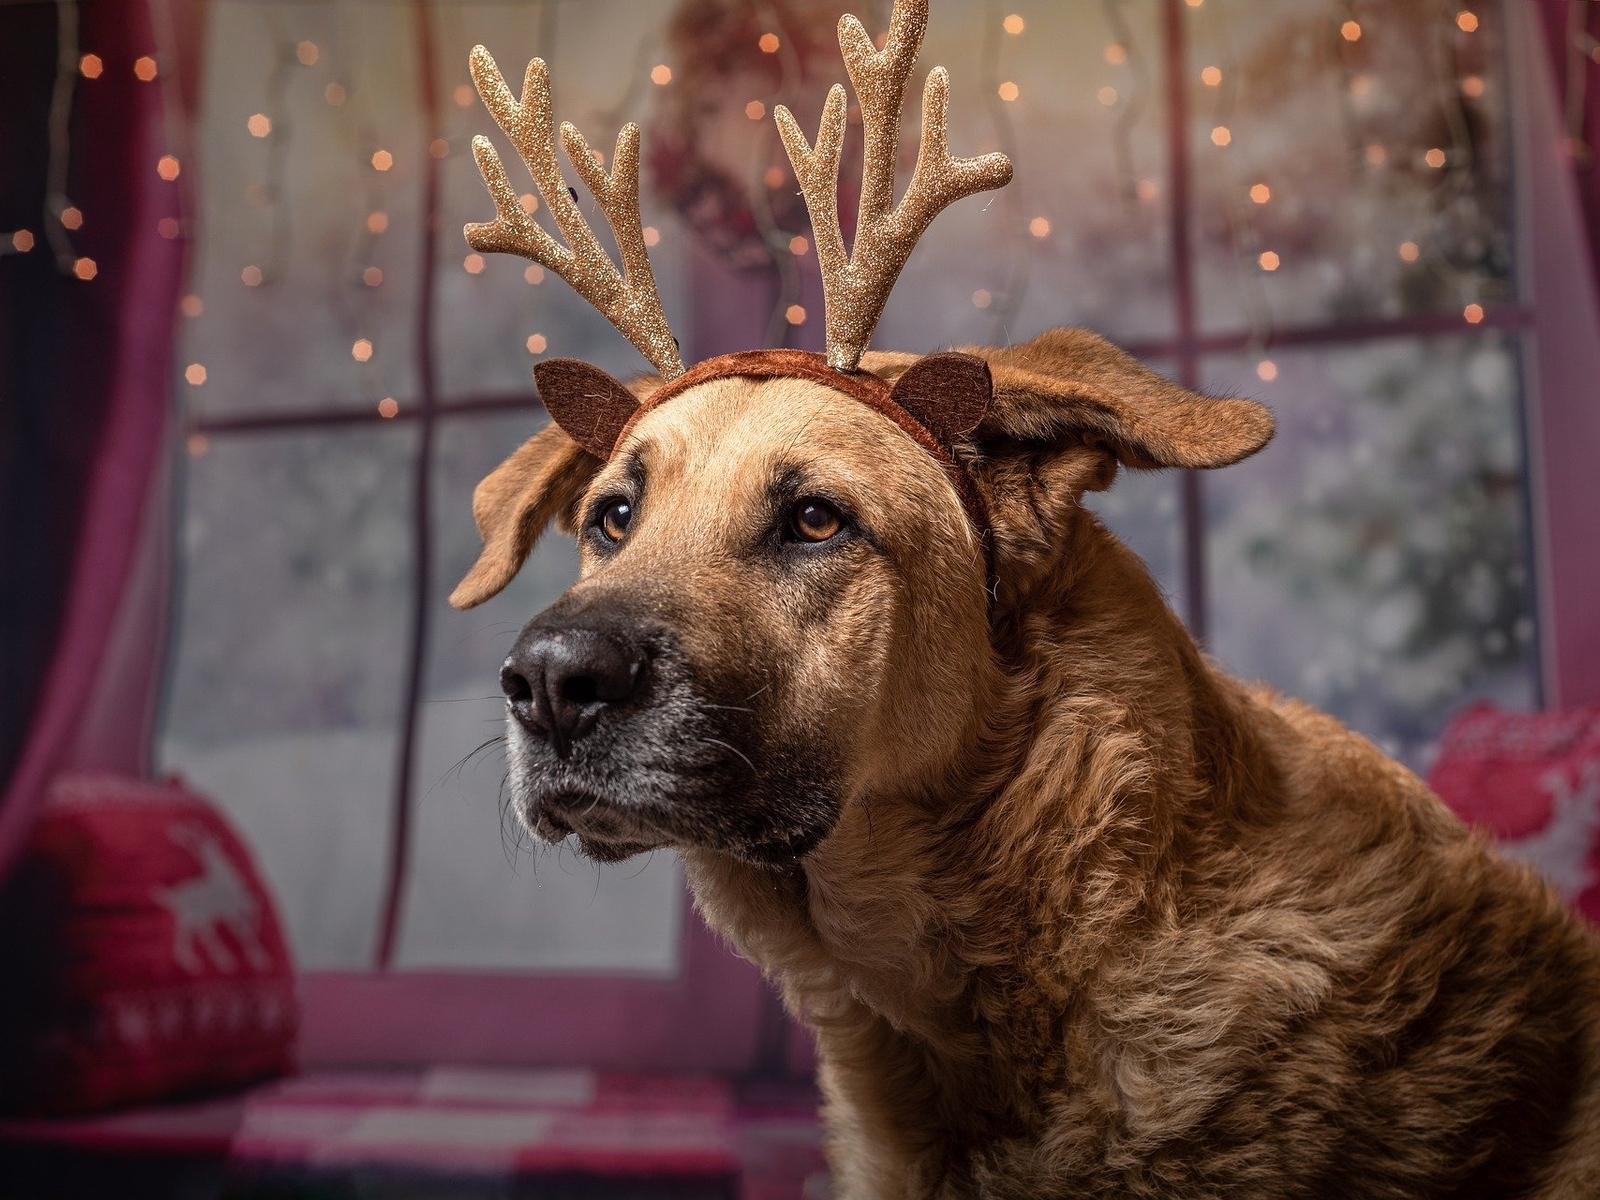 Image: Dog, costume, deer antlers, holiday, lights, window